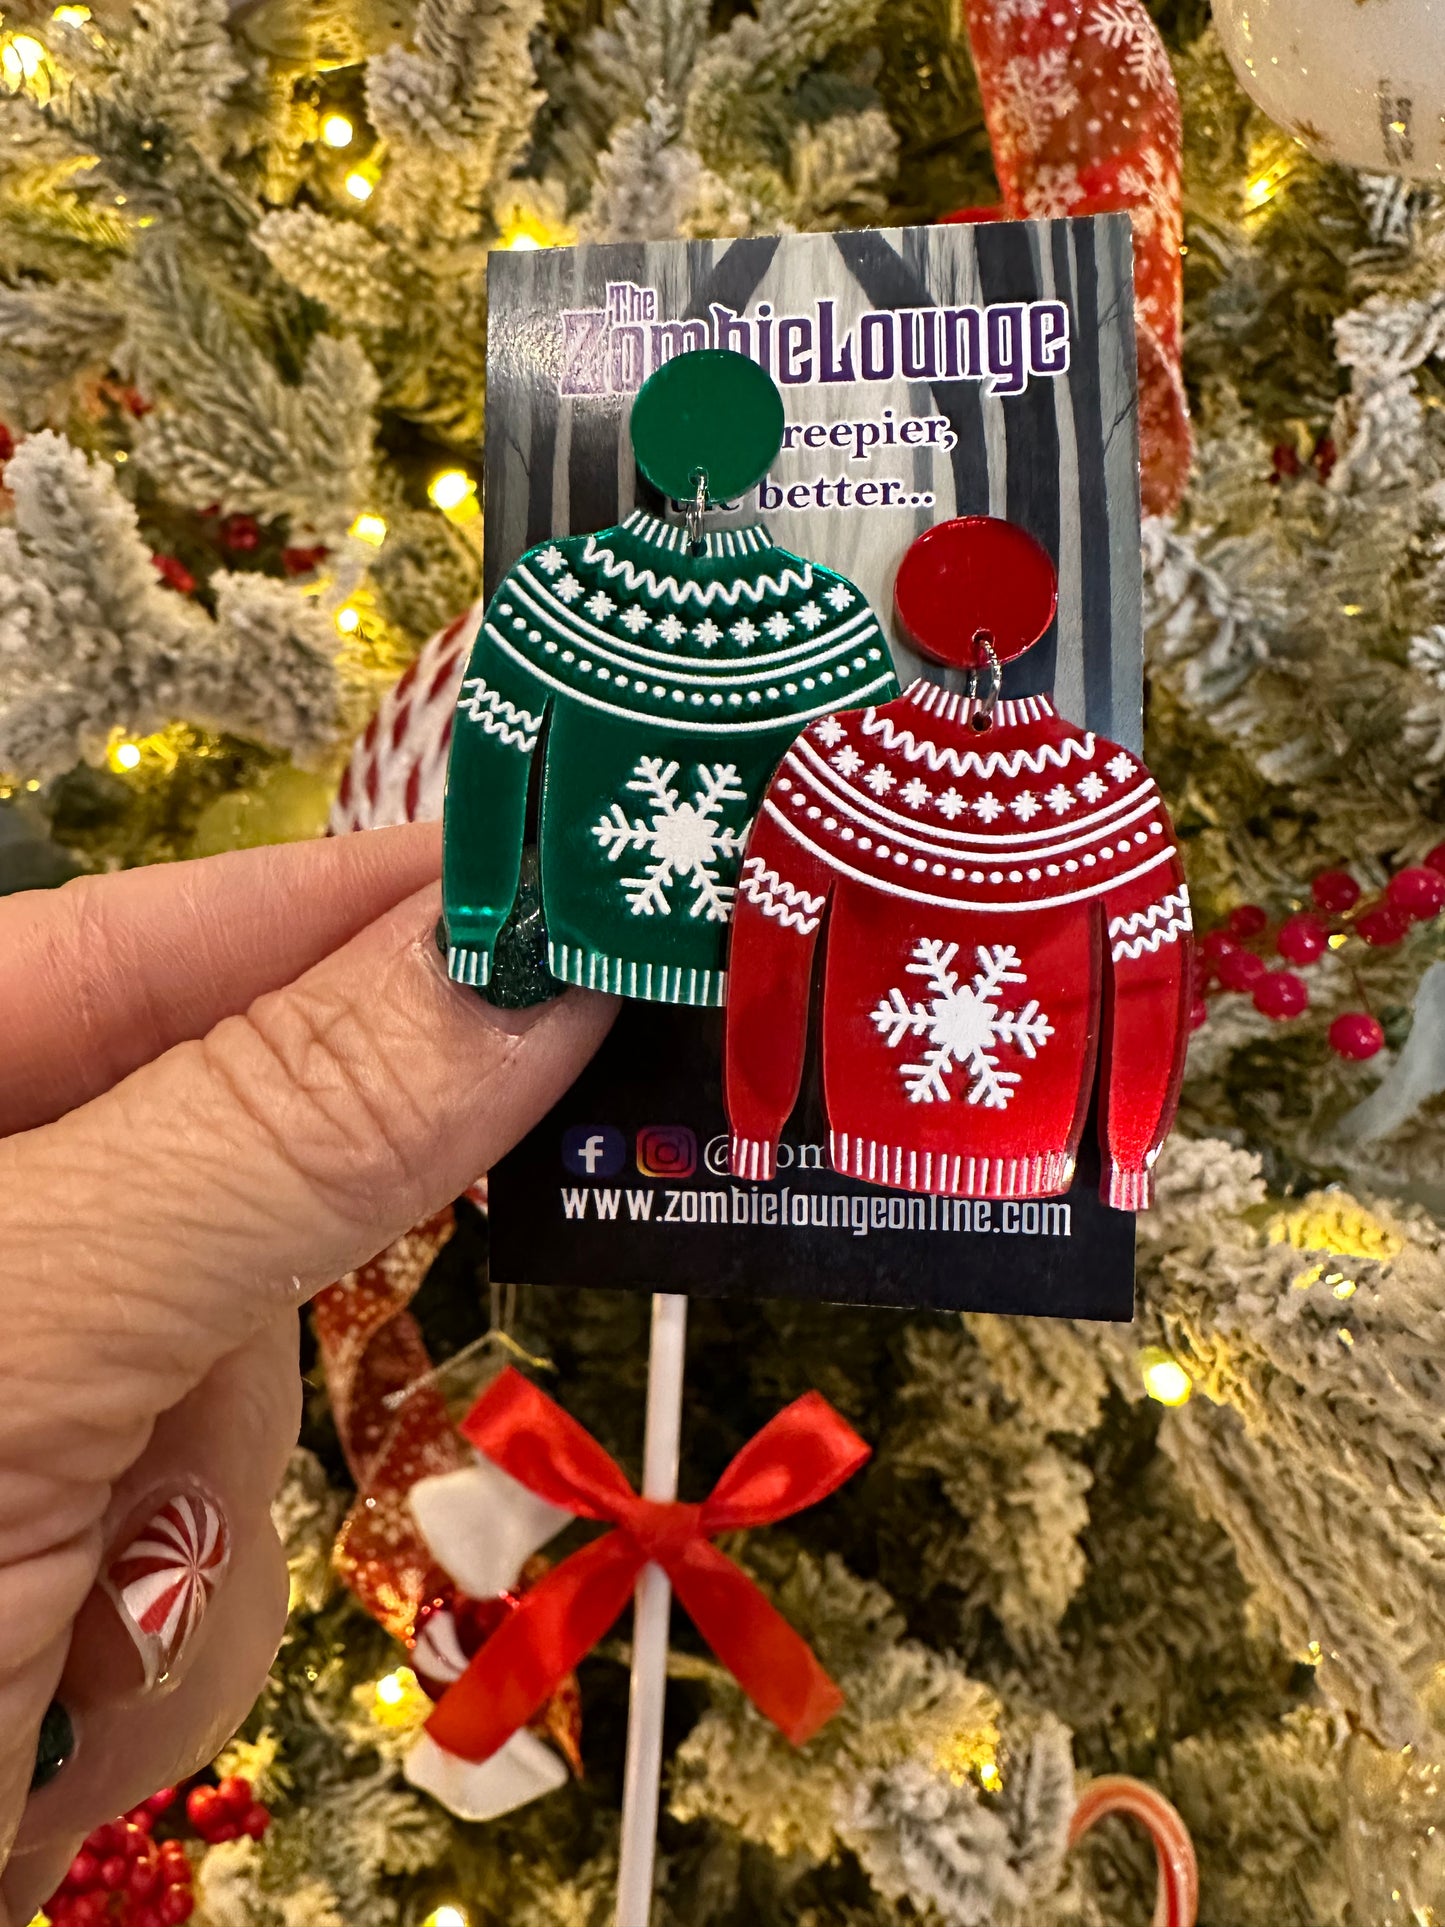 Christmas Sweater Earrings